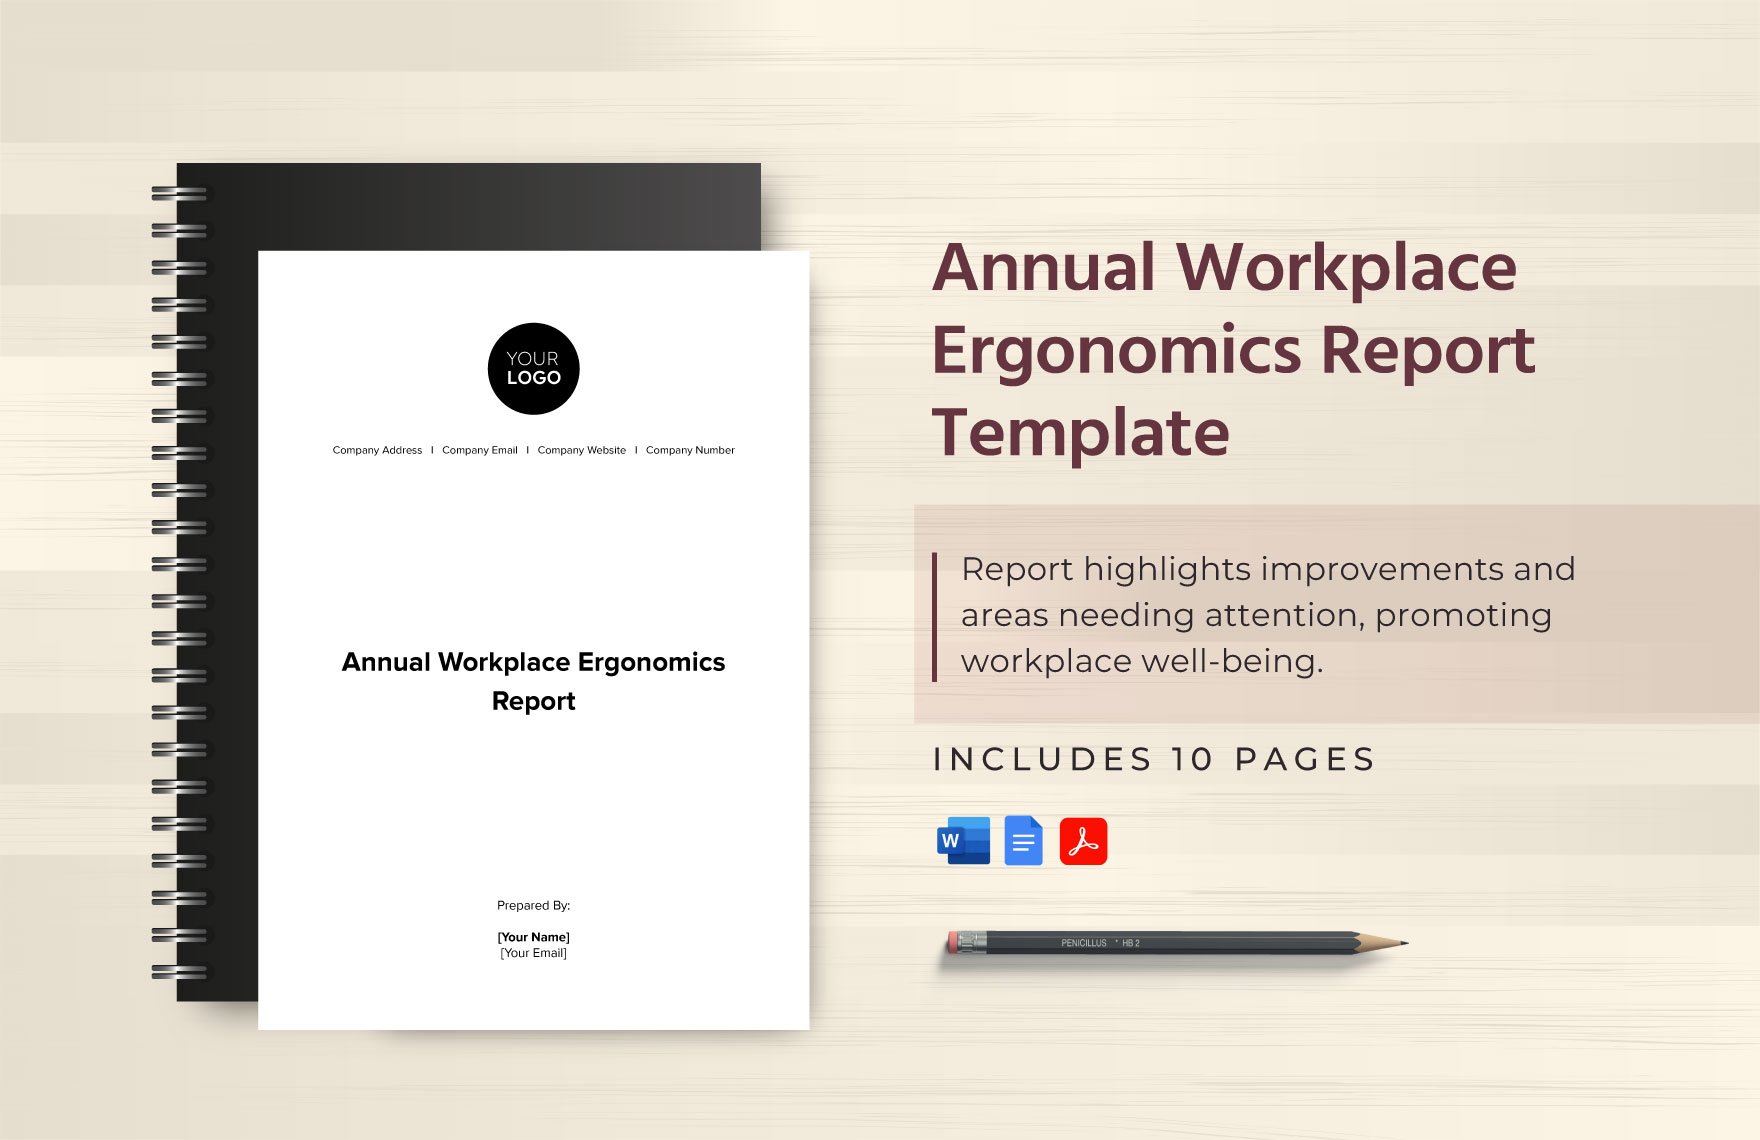 Annual Workplace Ergonomics Report Template